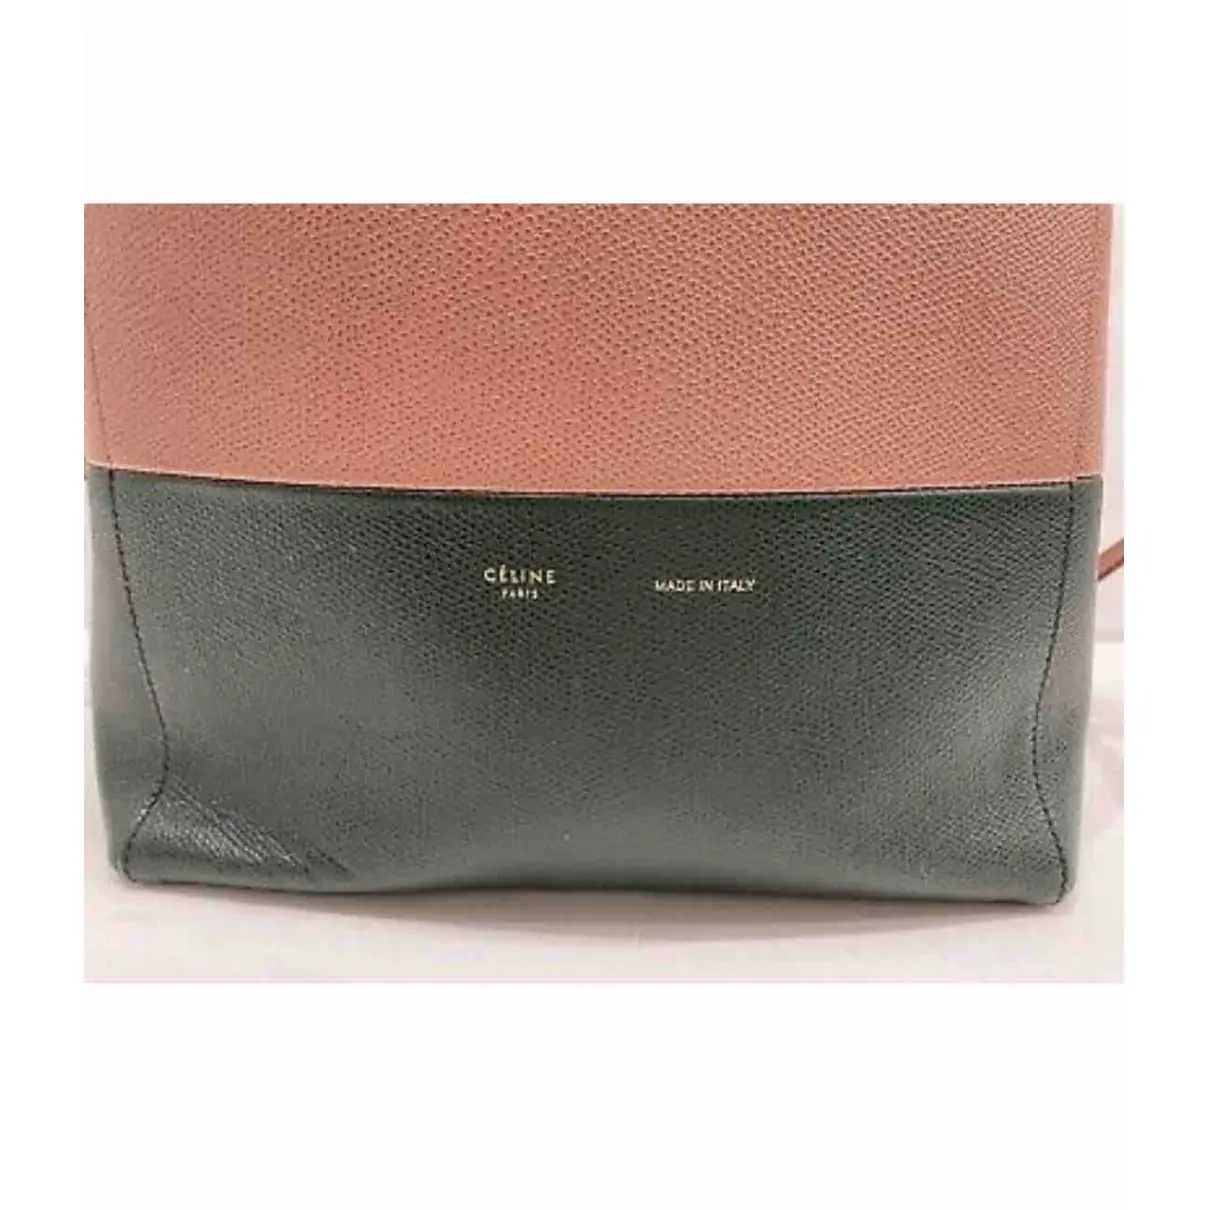 Buy Celine Cabas leather tote online